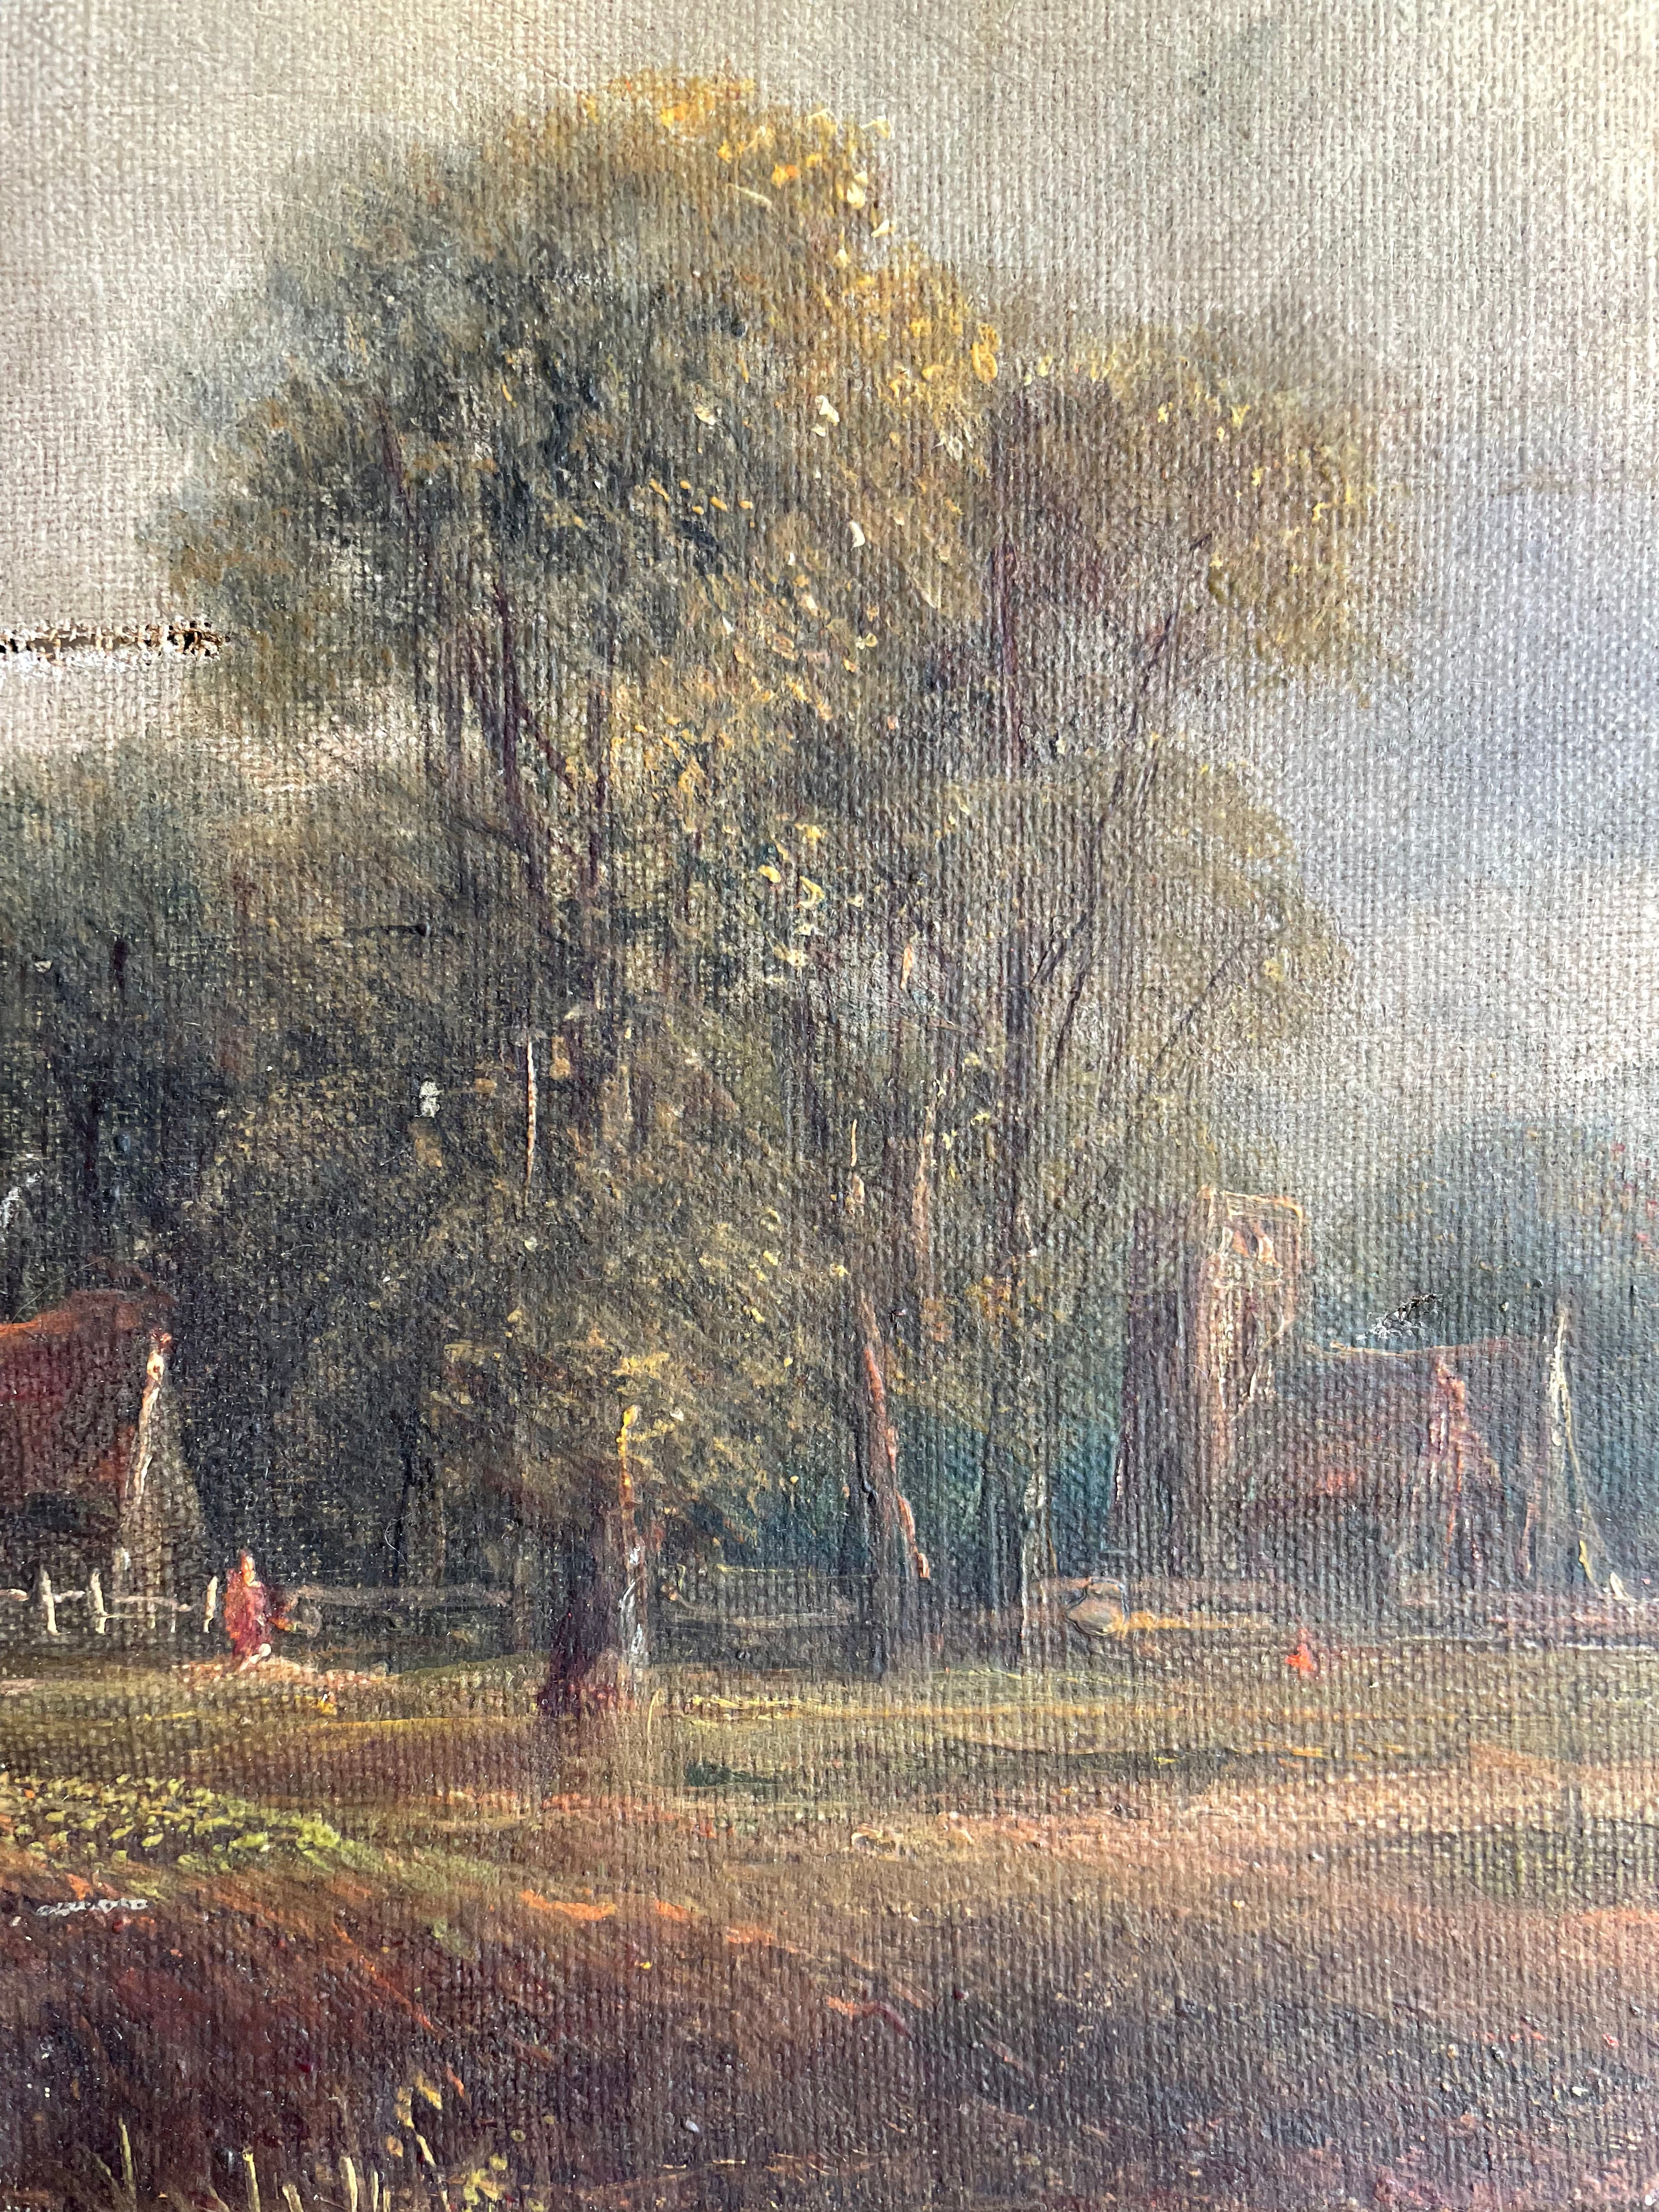 Antique Landscape: Unframed Oil on canvas